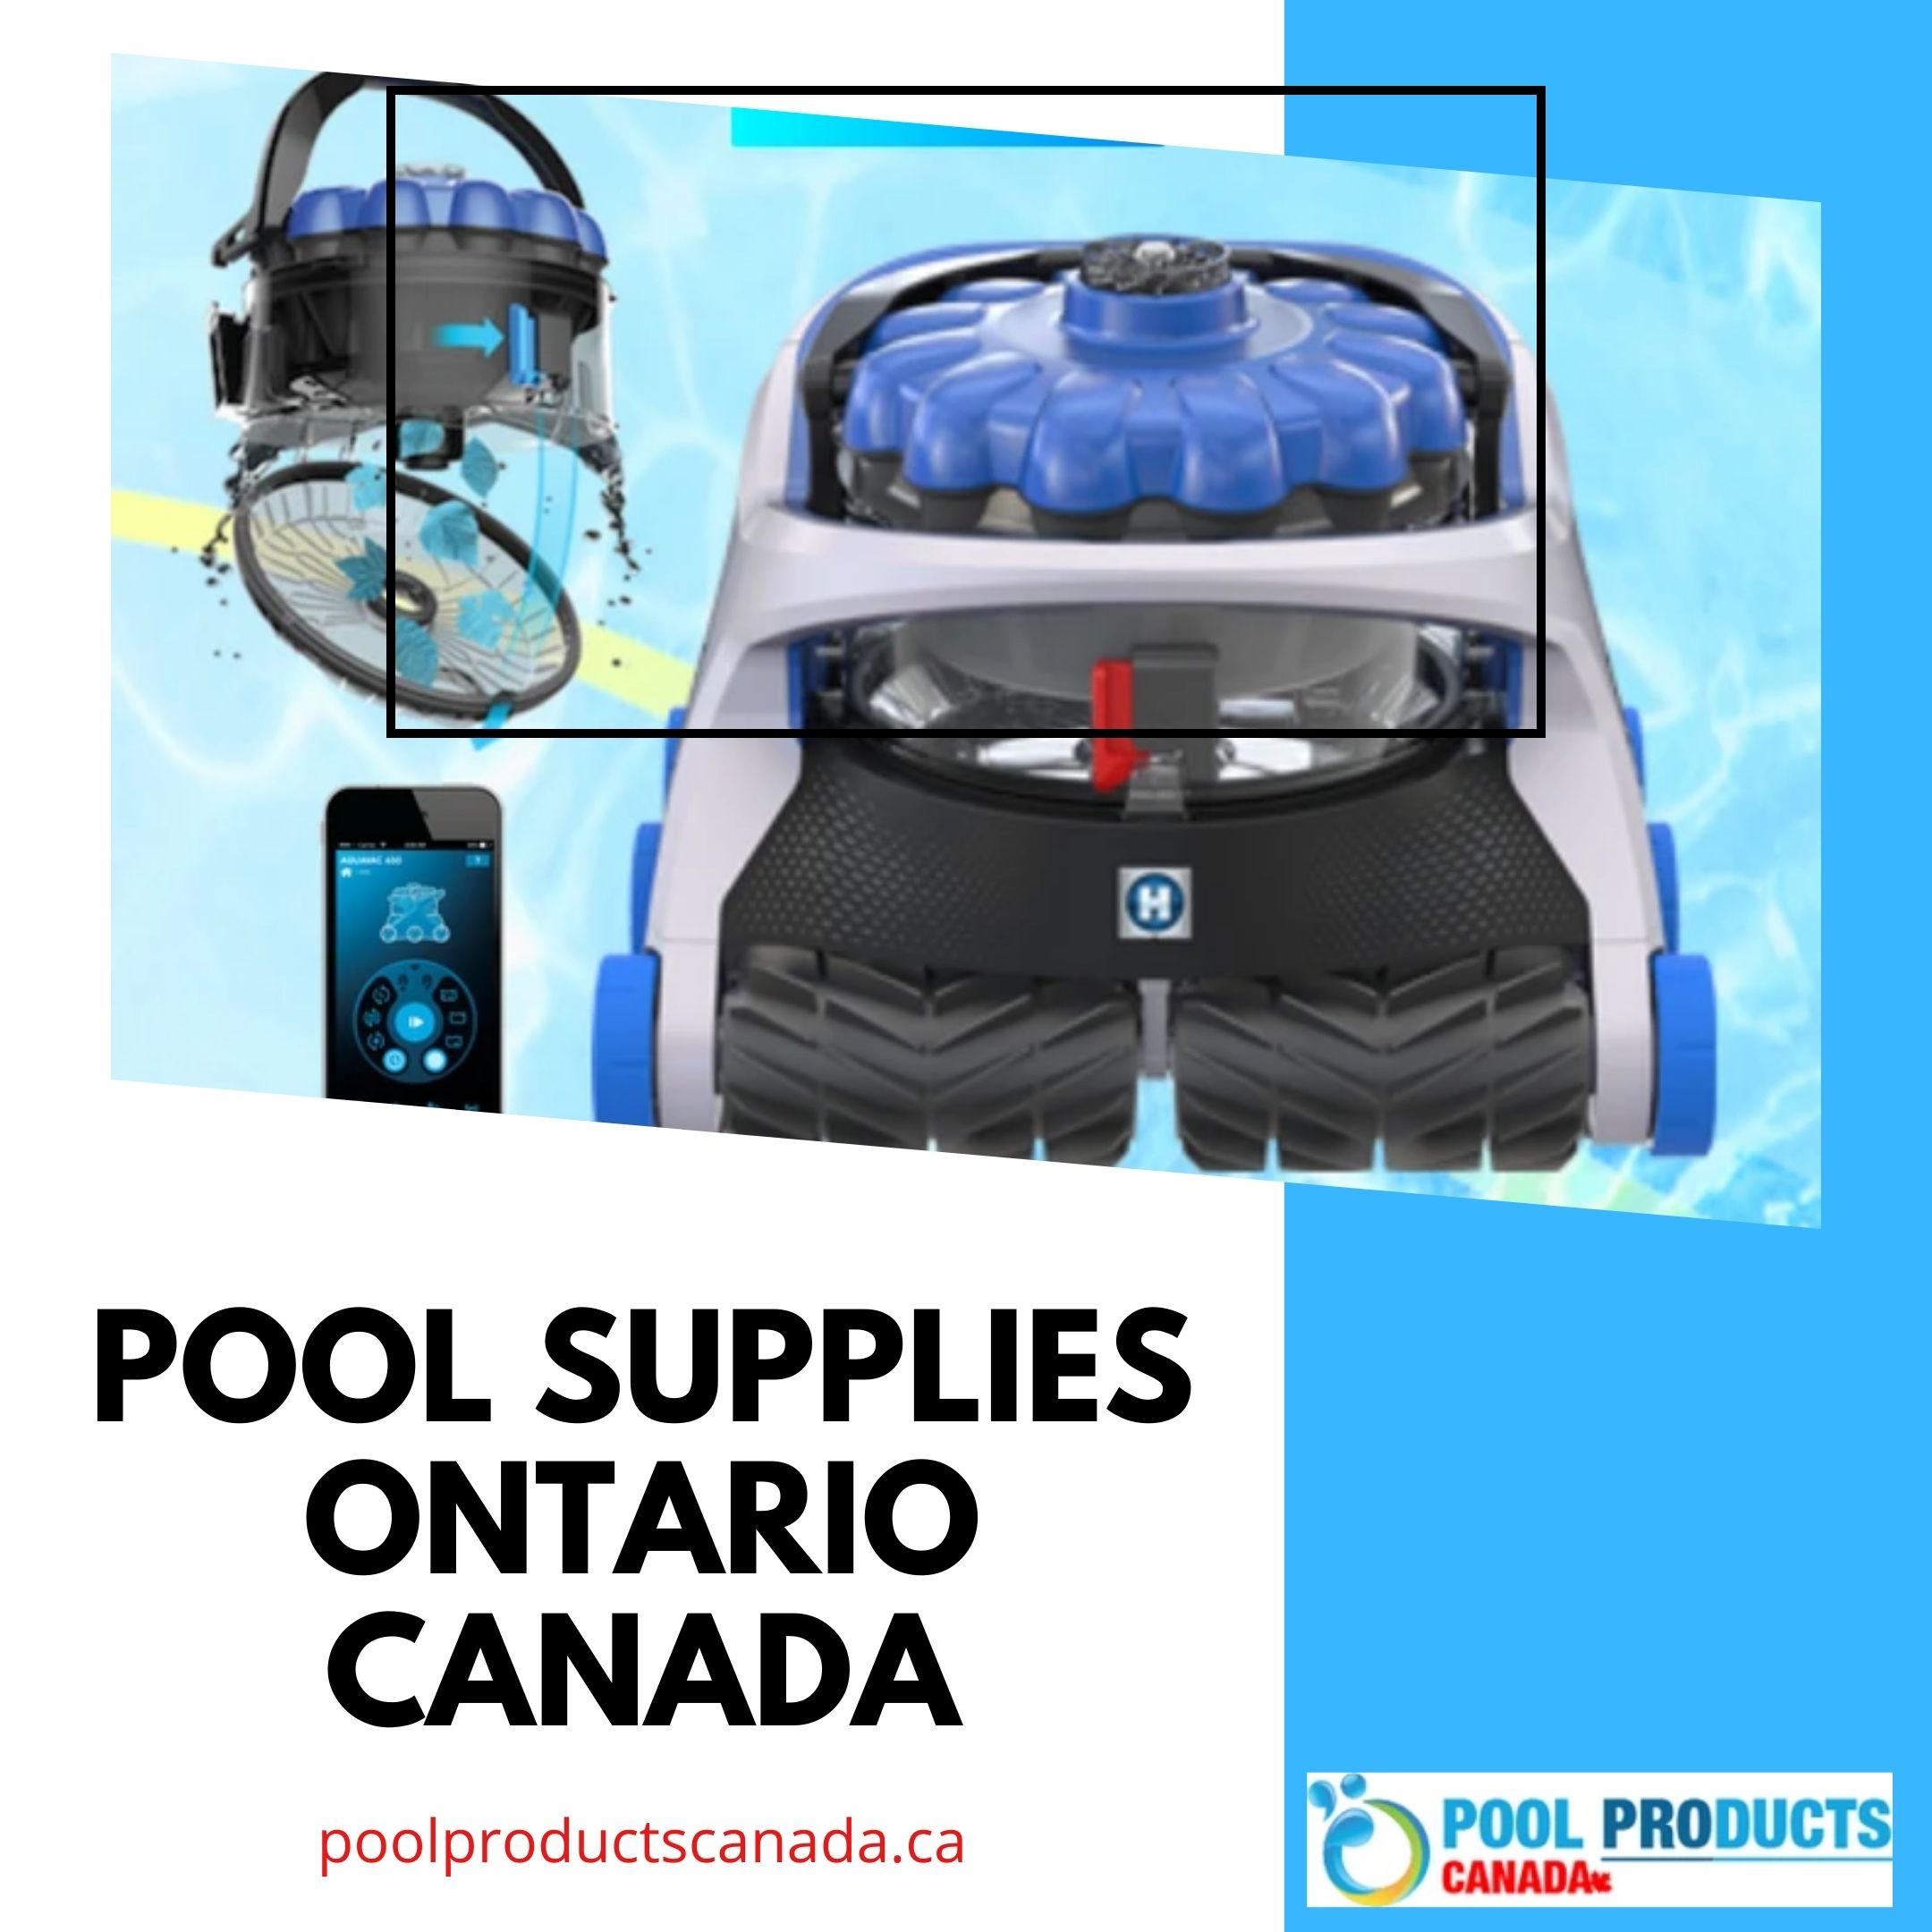 Pool Supplies Ontario Canada.jpg  by poolproductsca